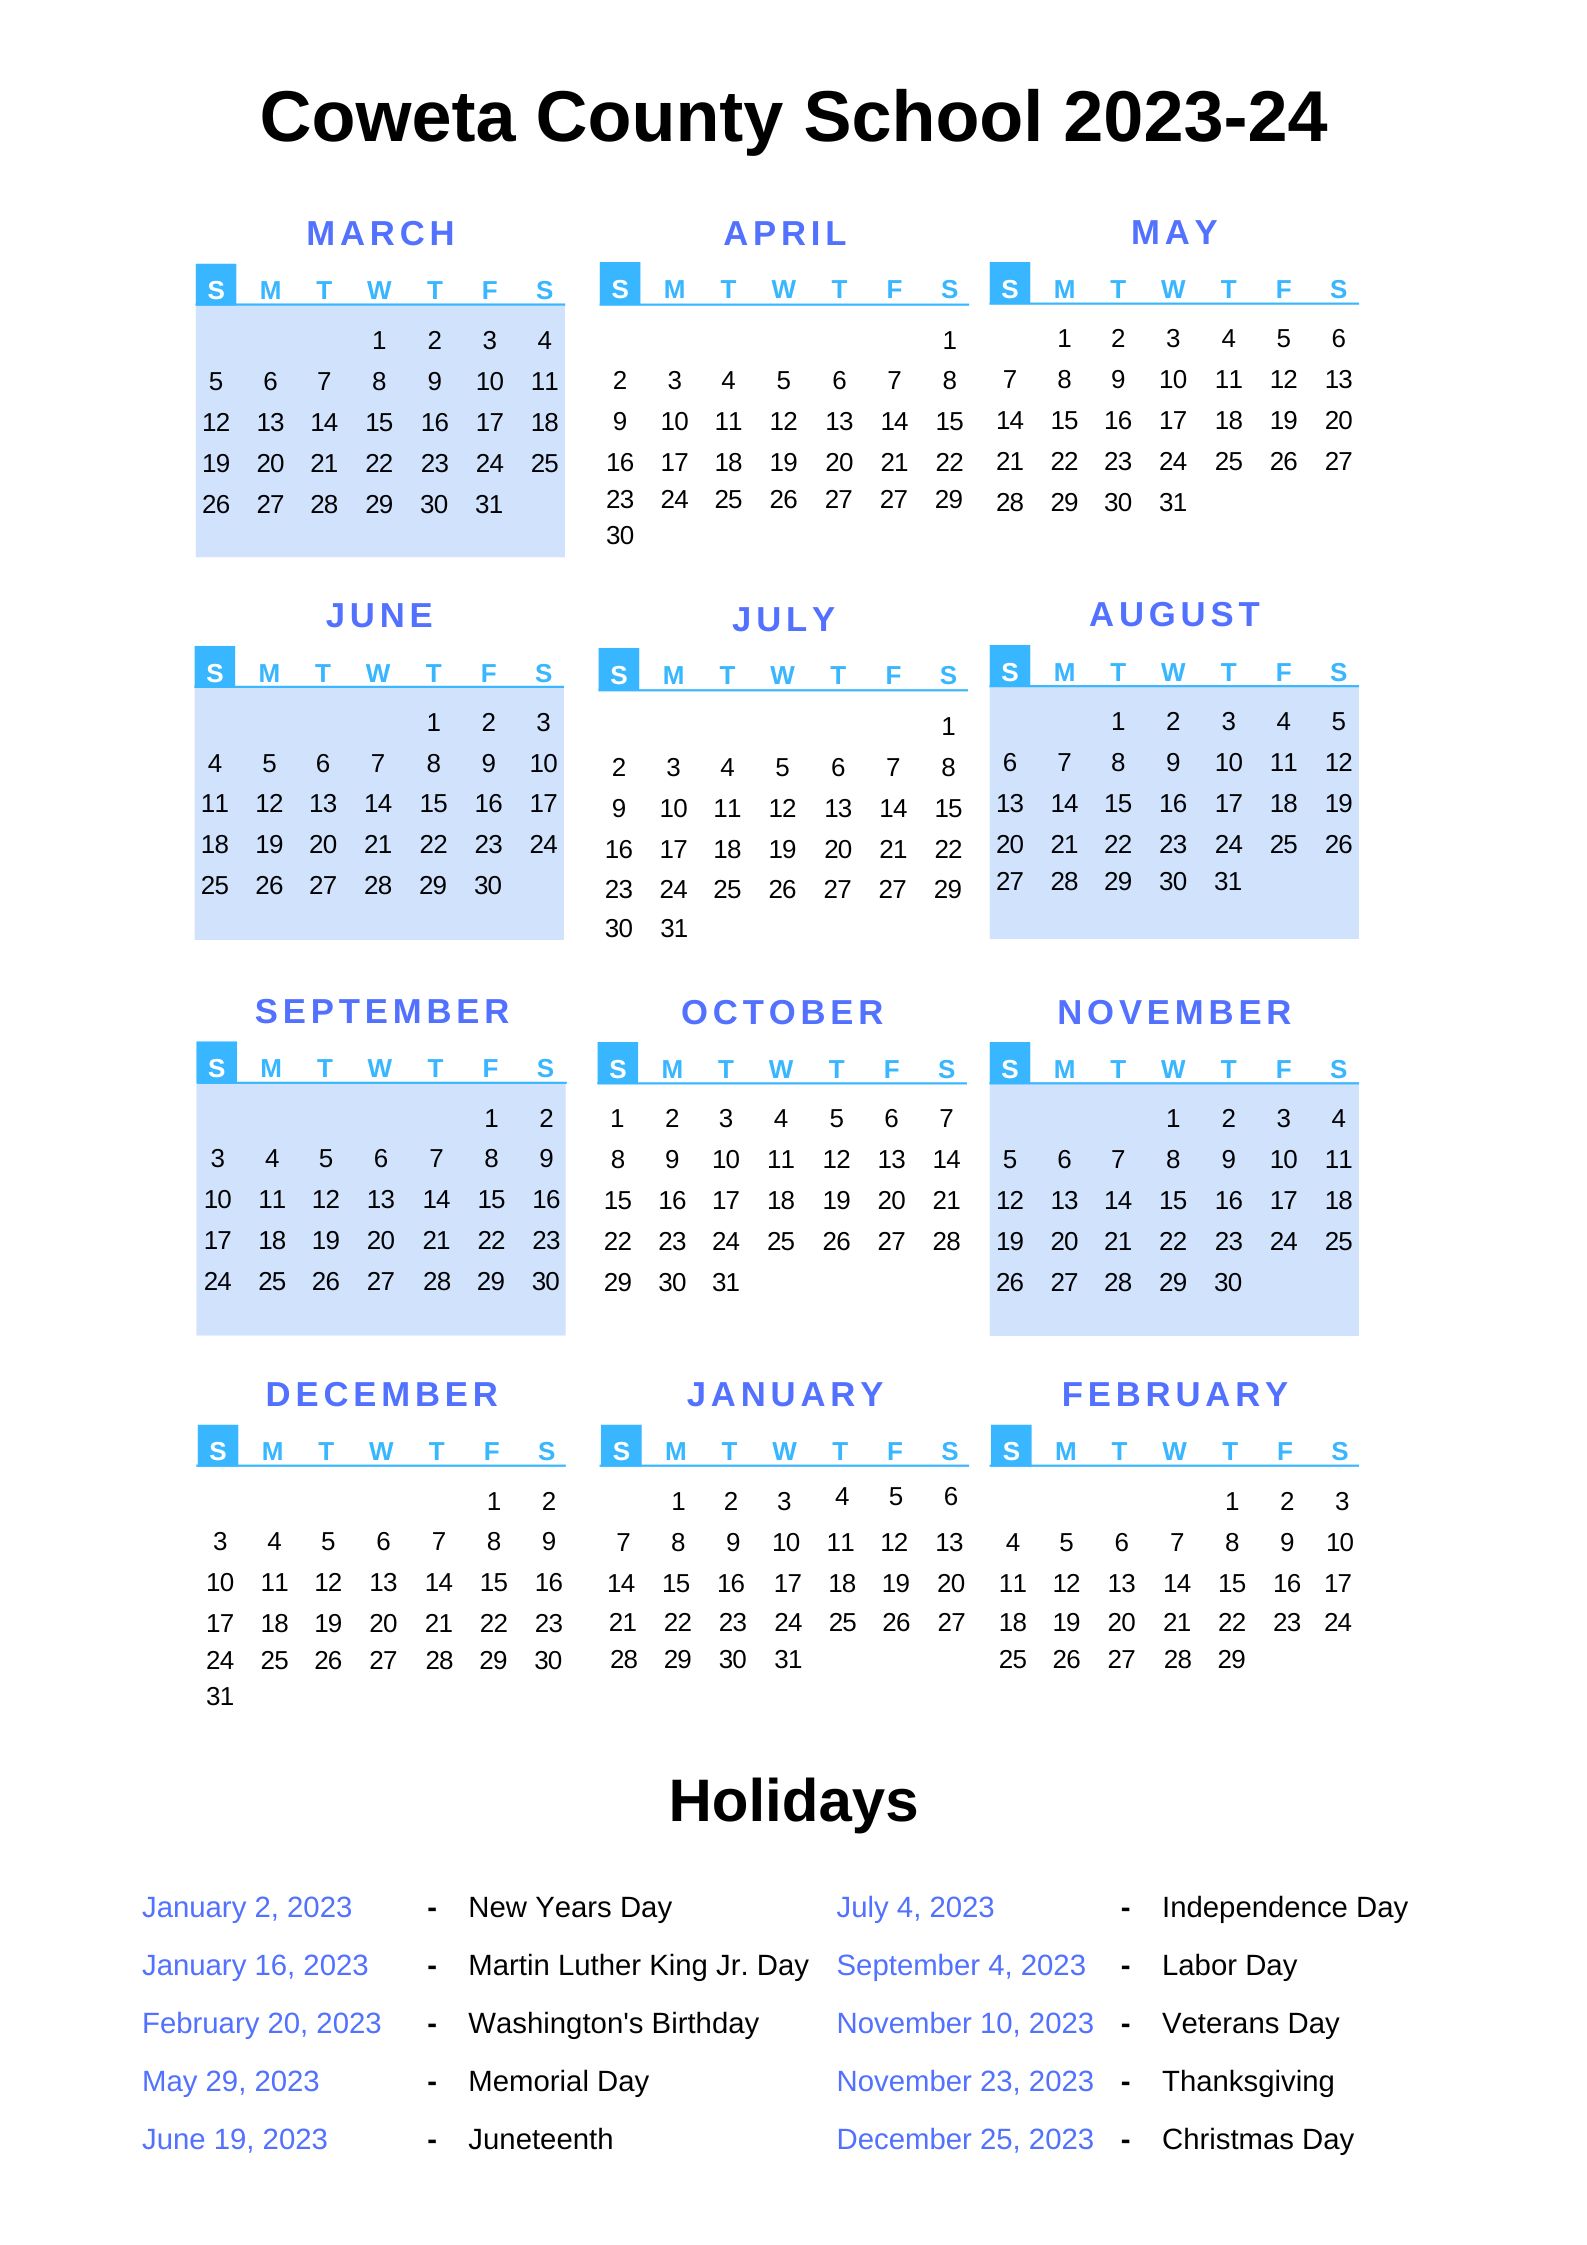 coweta-county-schools-calendar-2023-24-with-holidays